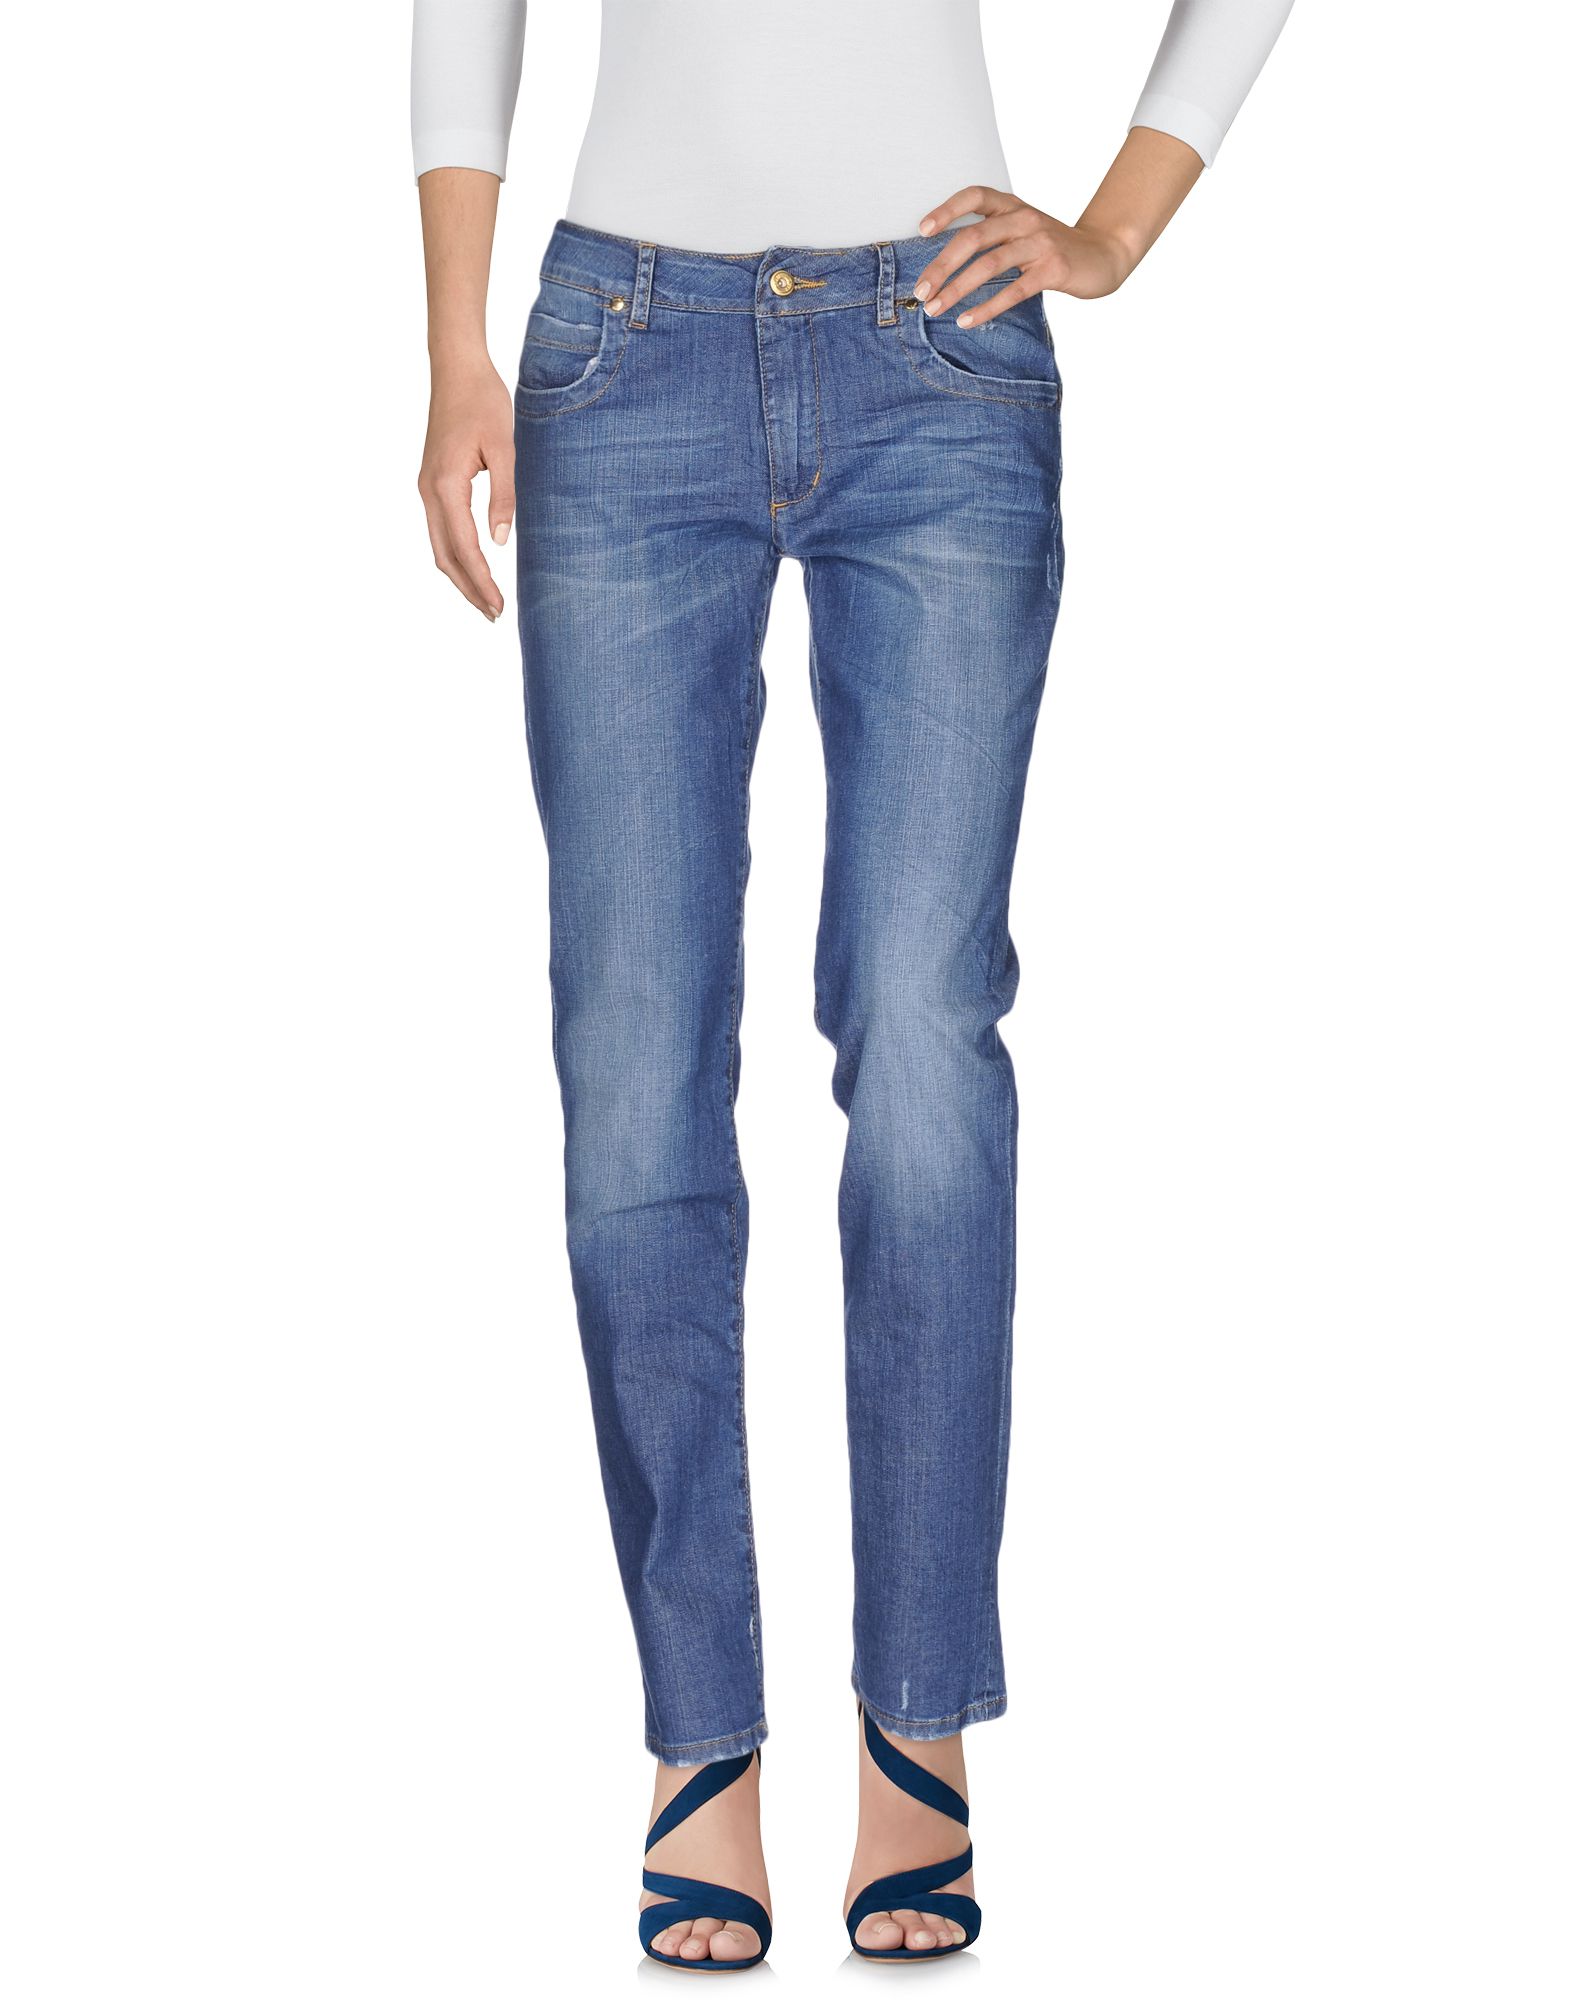 SHAFTSHAFT Jeans | DailyMail